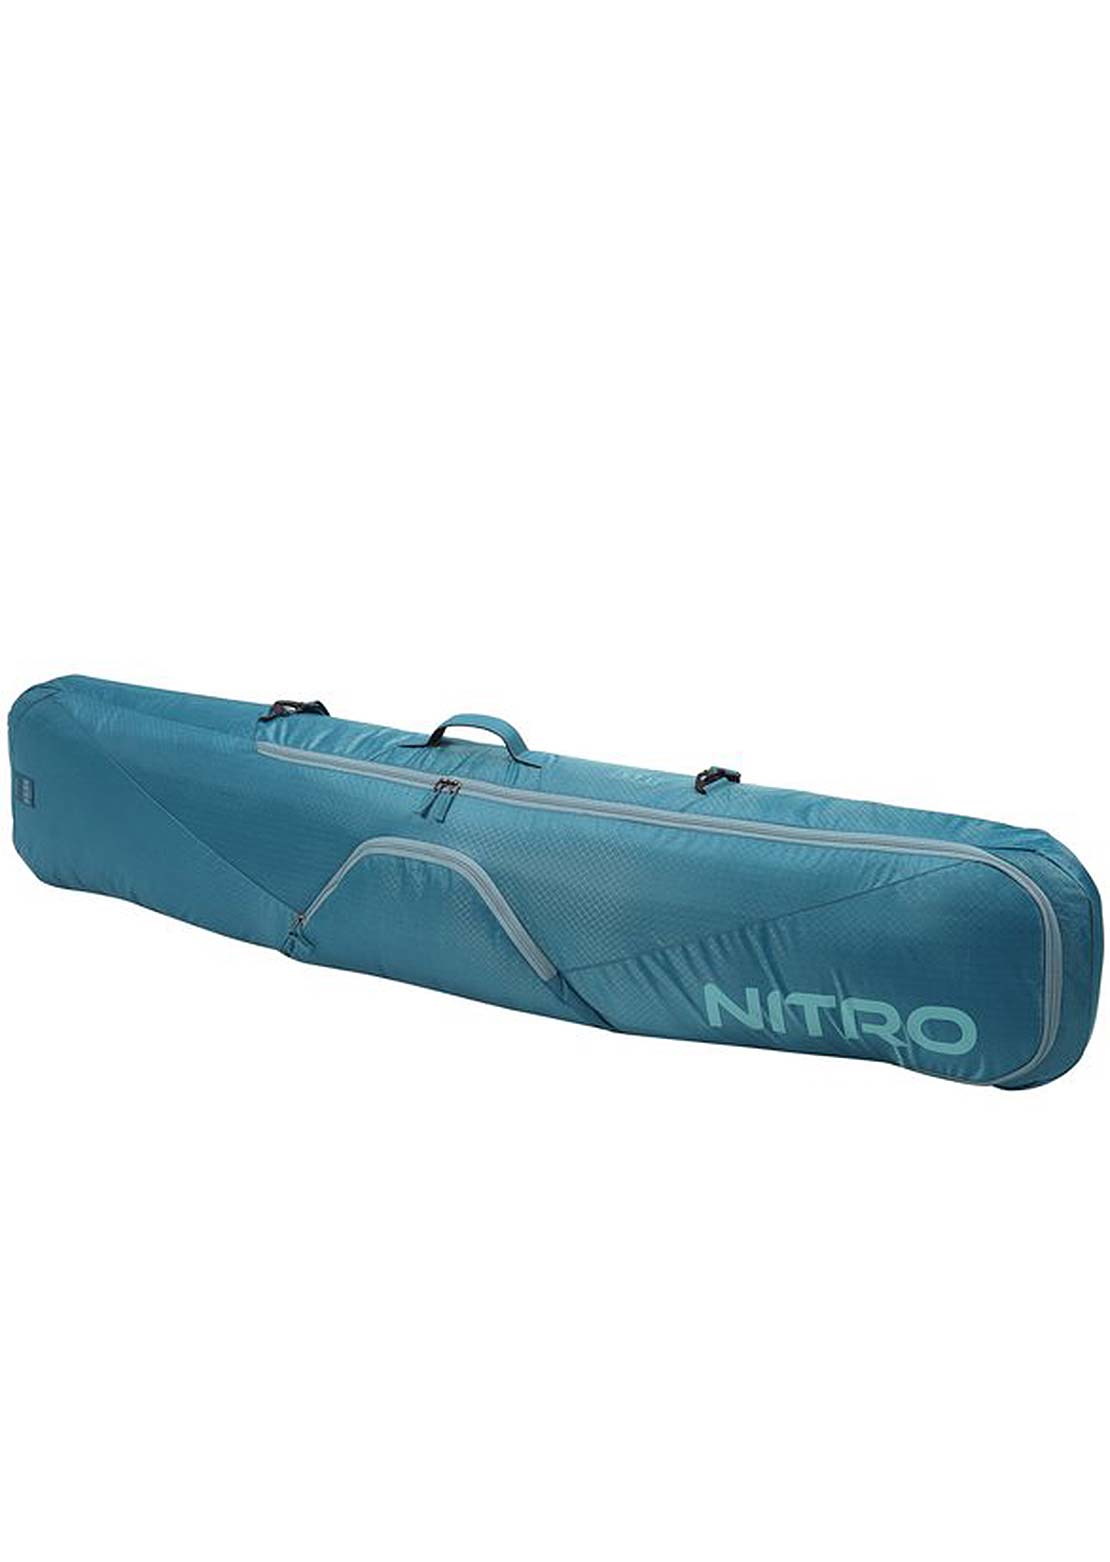 Nitro Sub Snowboard Bag 165 cm Arctic